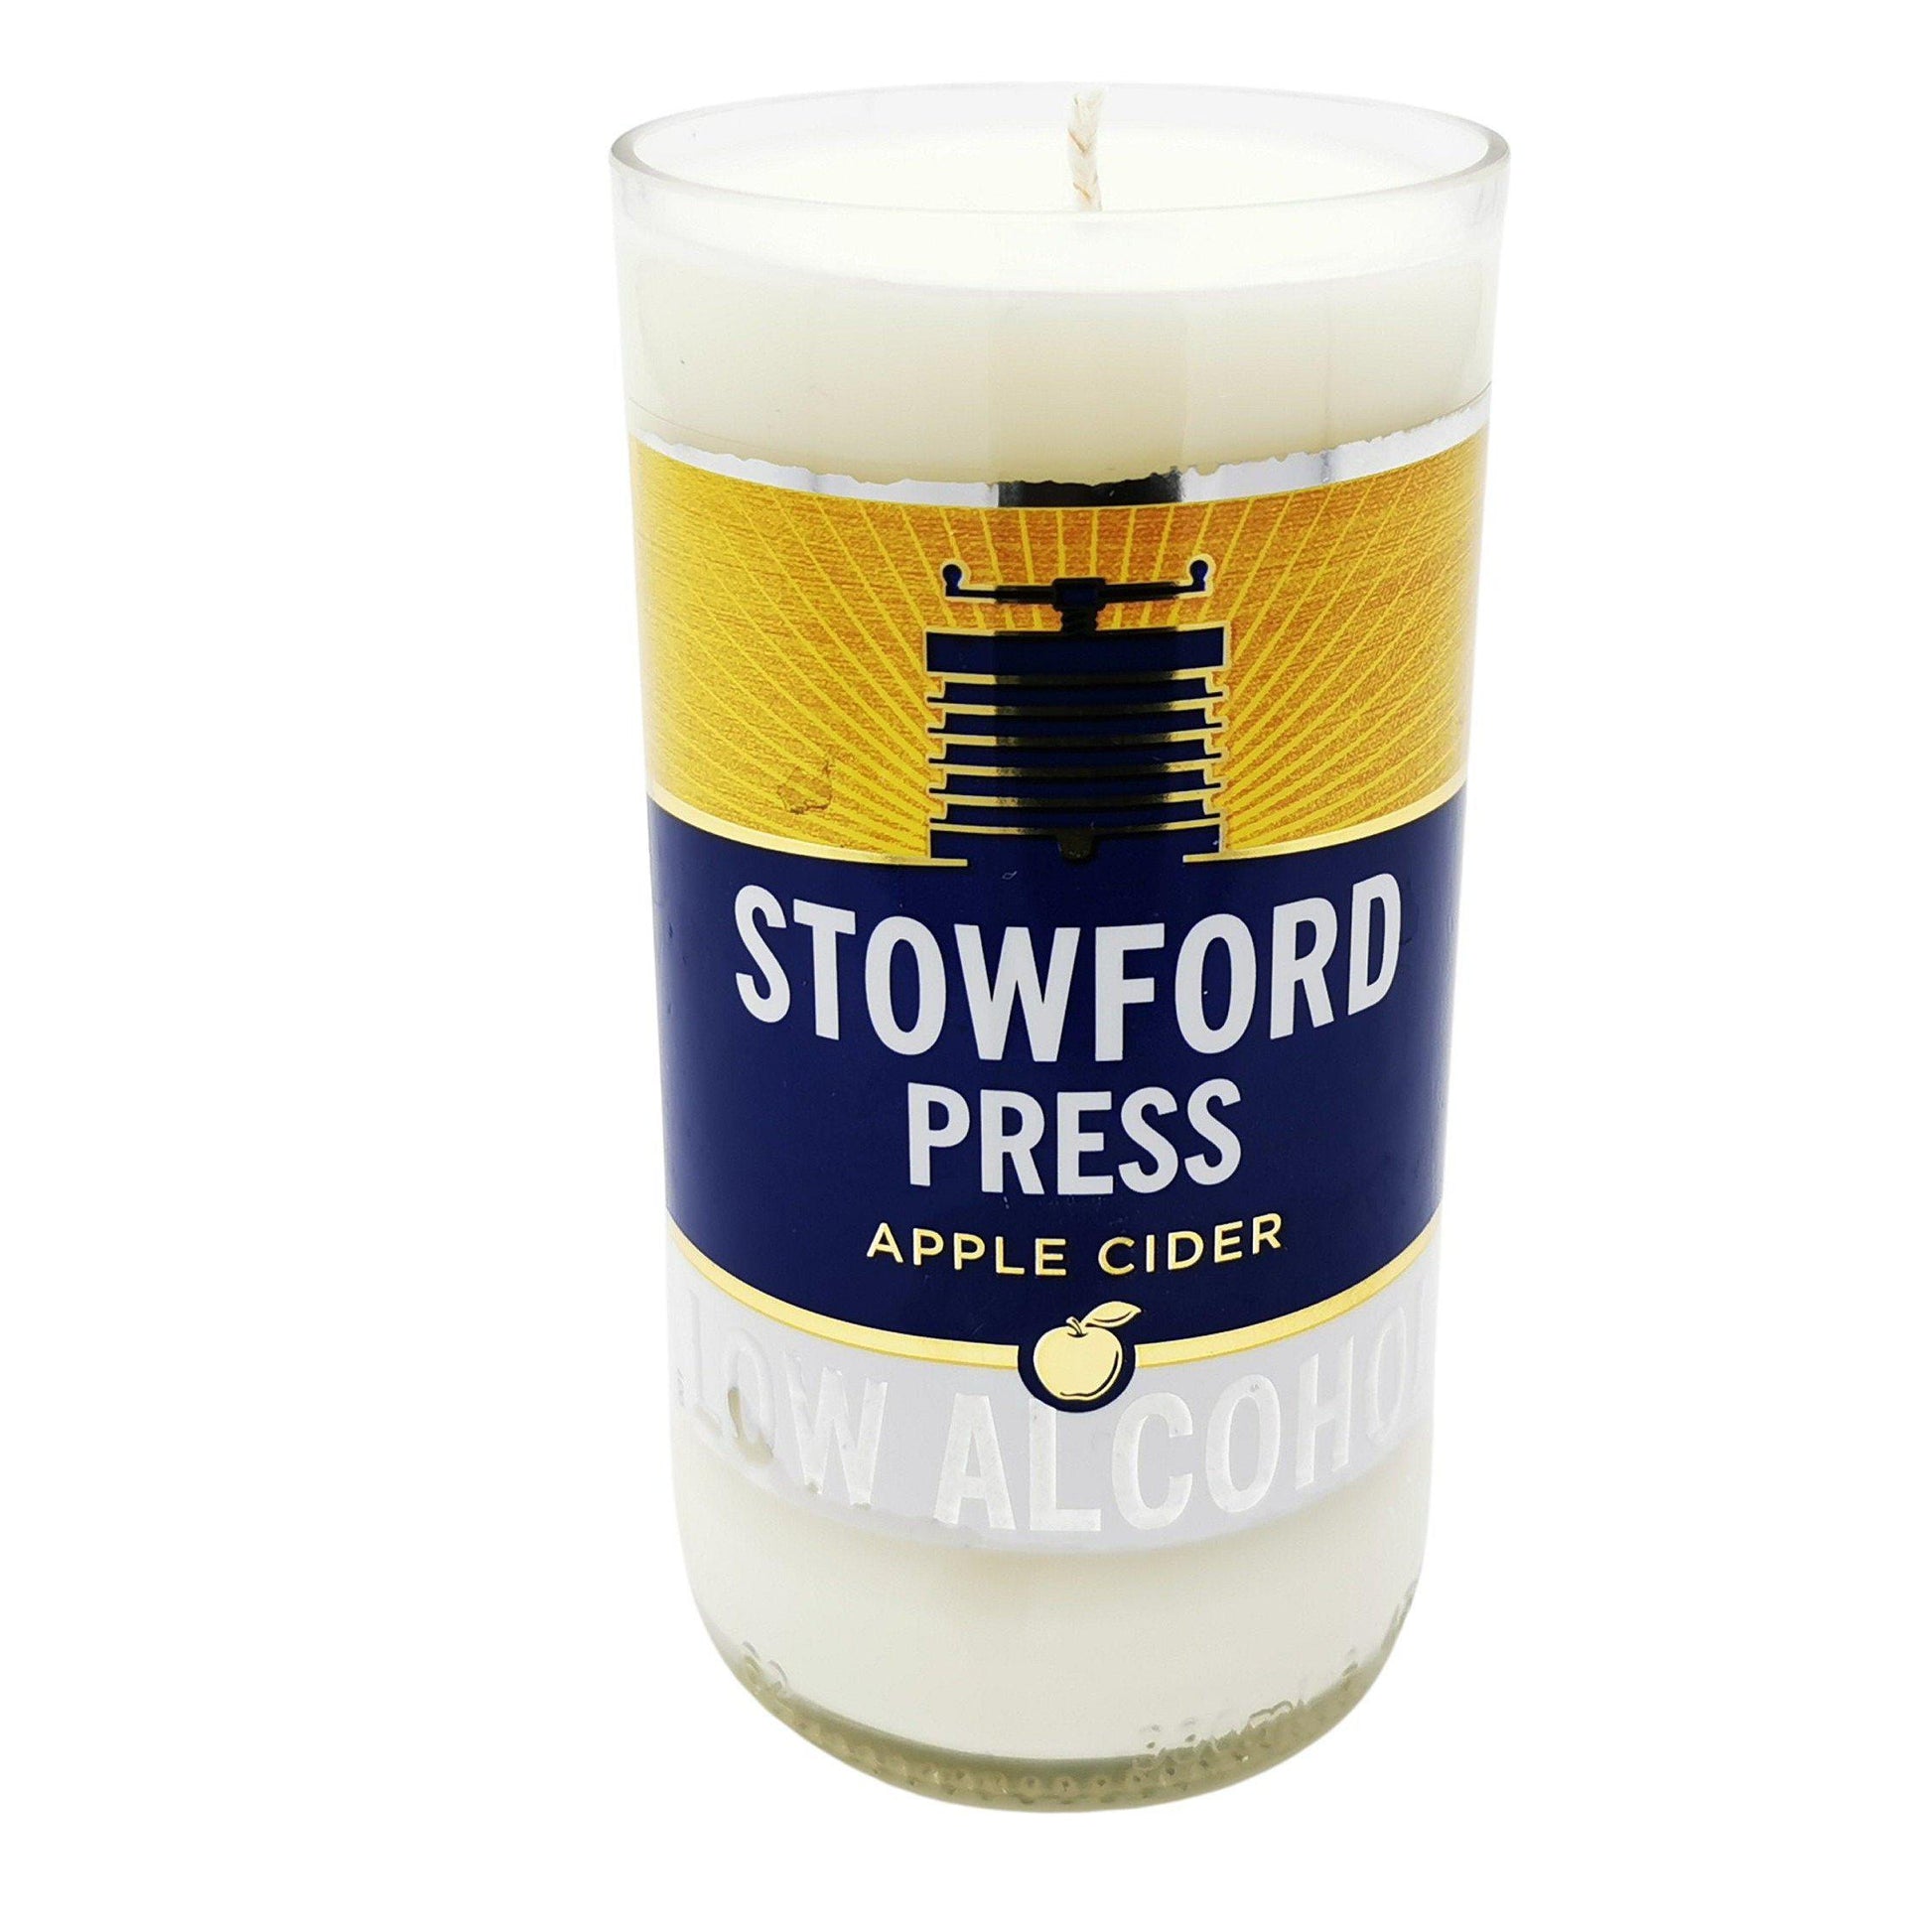 Stowford Press Low Alcohol Cider Bottle Candle Cider Bottle Candles Adhock Homeware